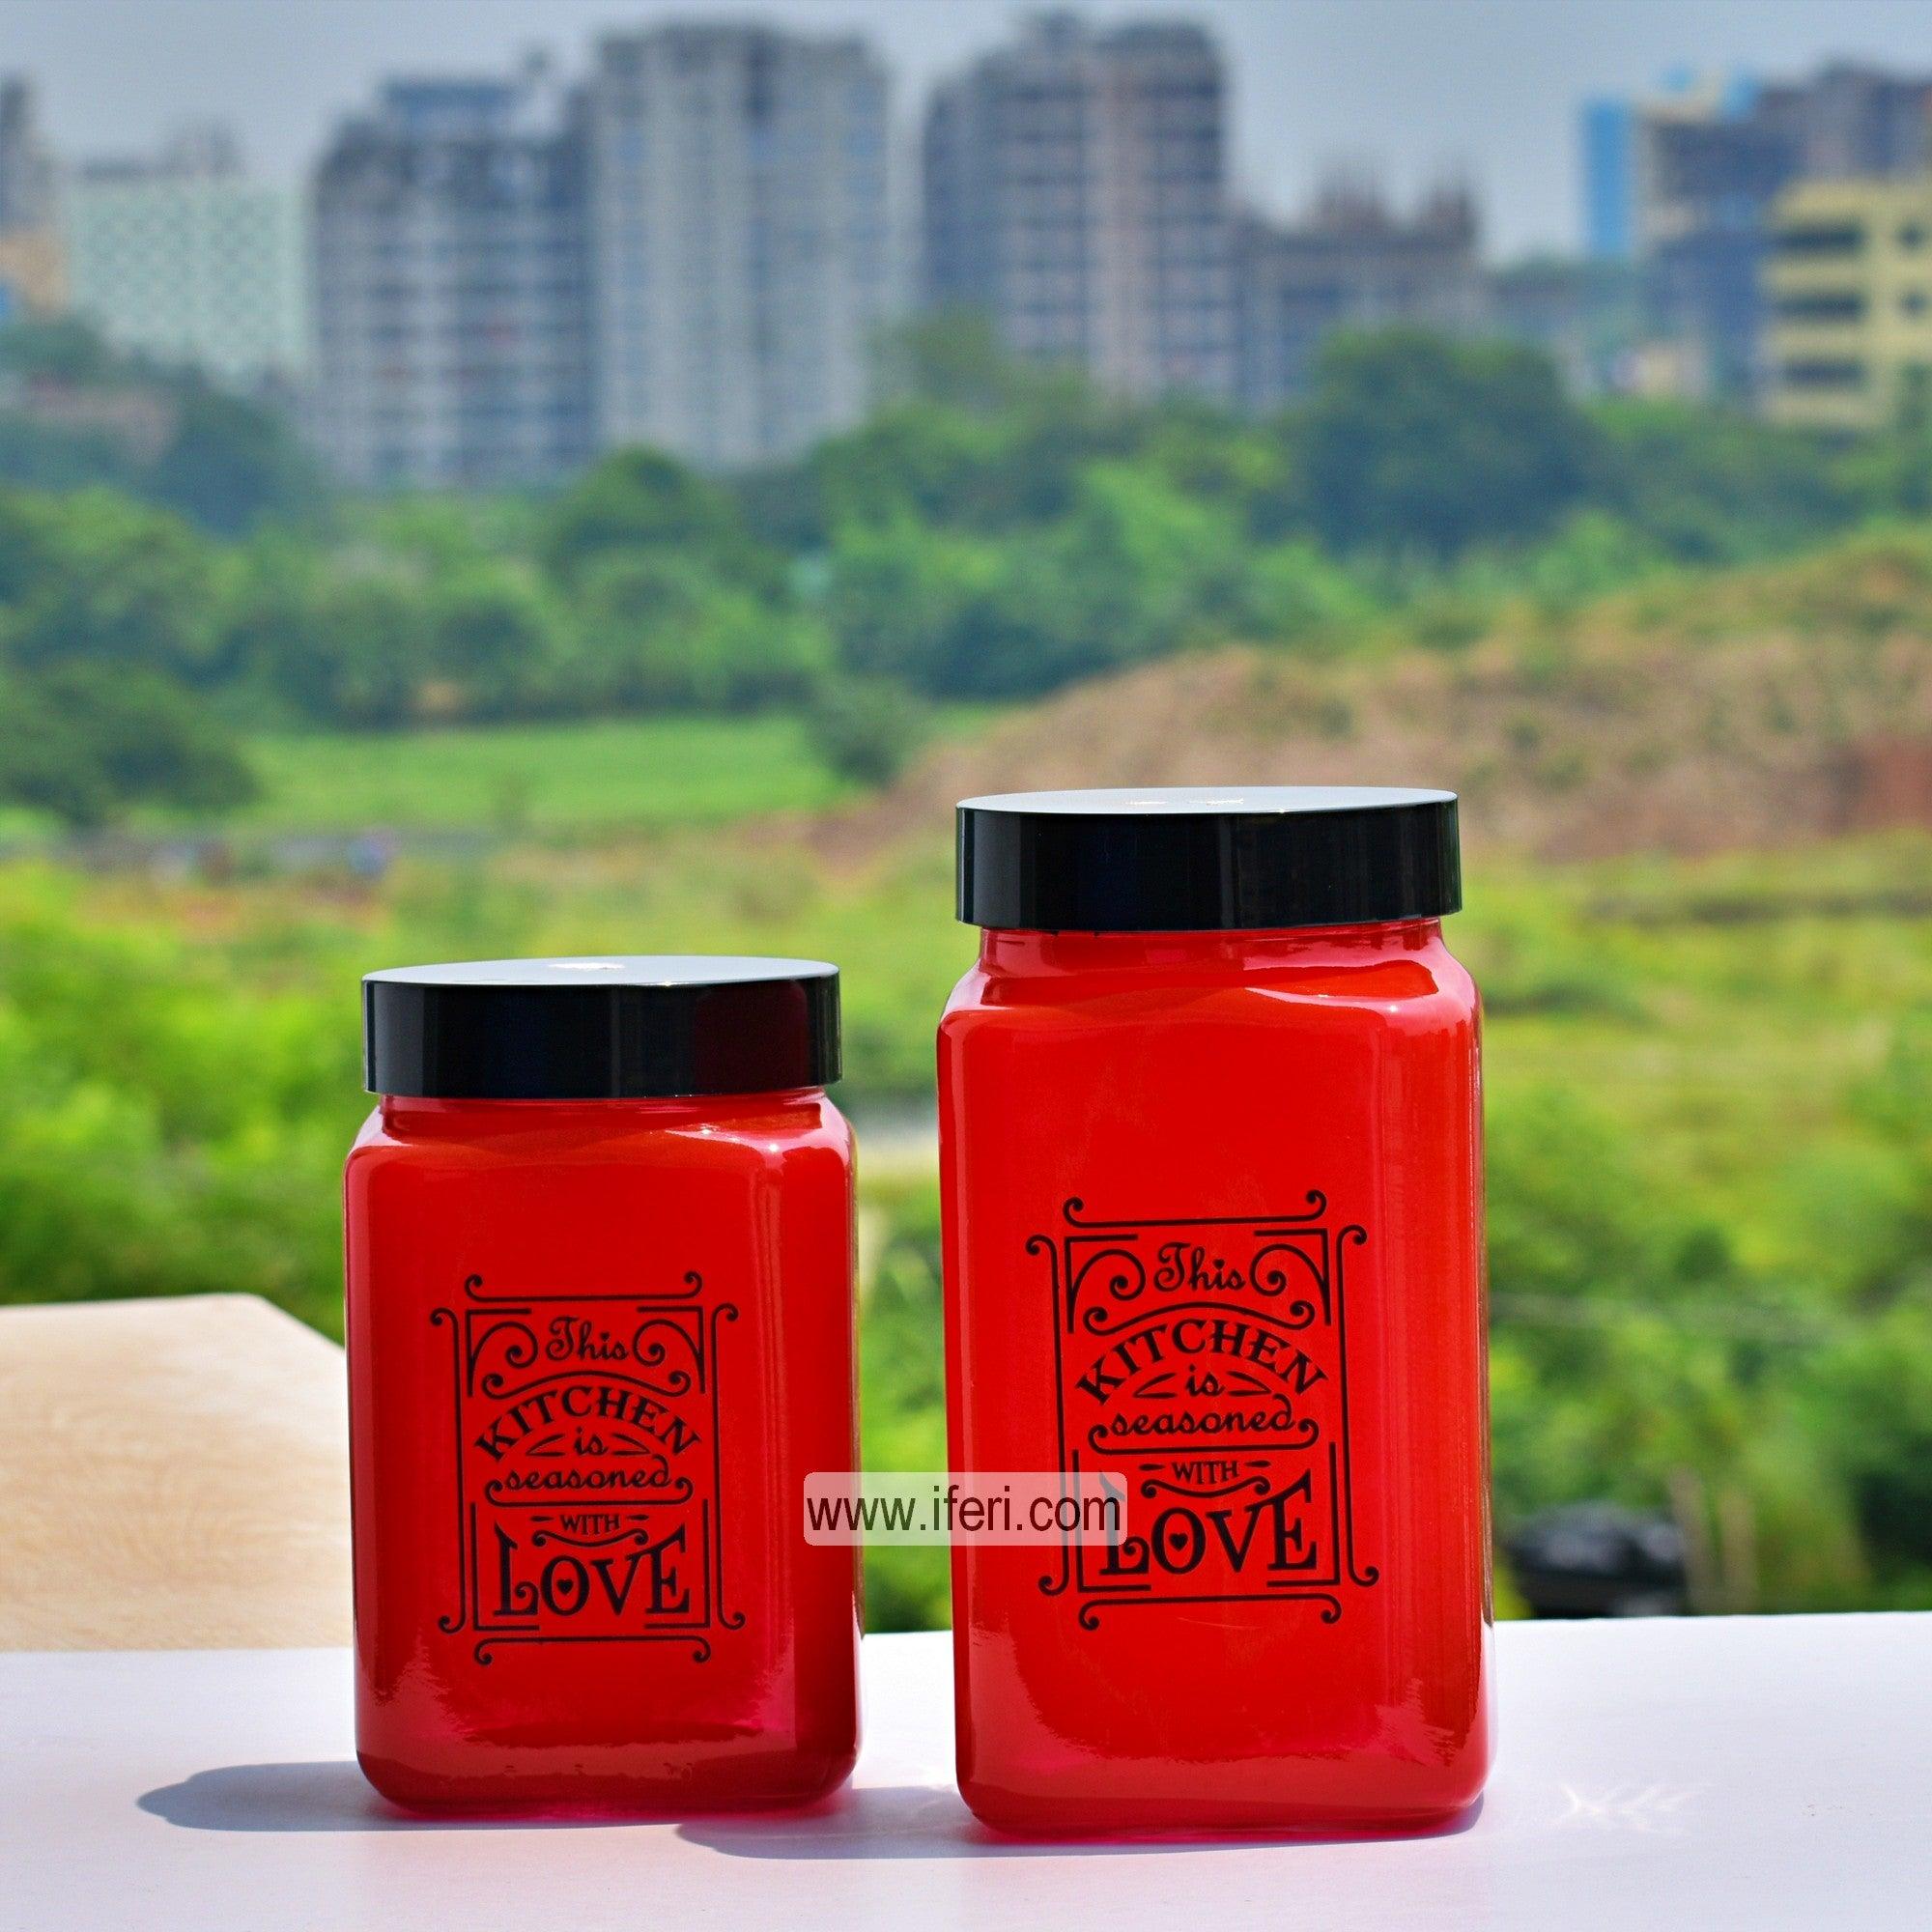 8.5 & 7 Inch Food Grade Airtight Glass Jar UT21069 Price in Bangladesh - iferi.com